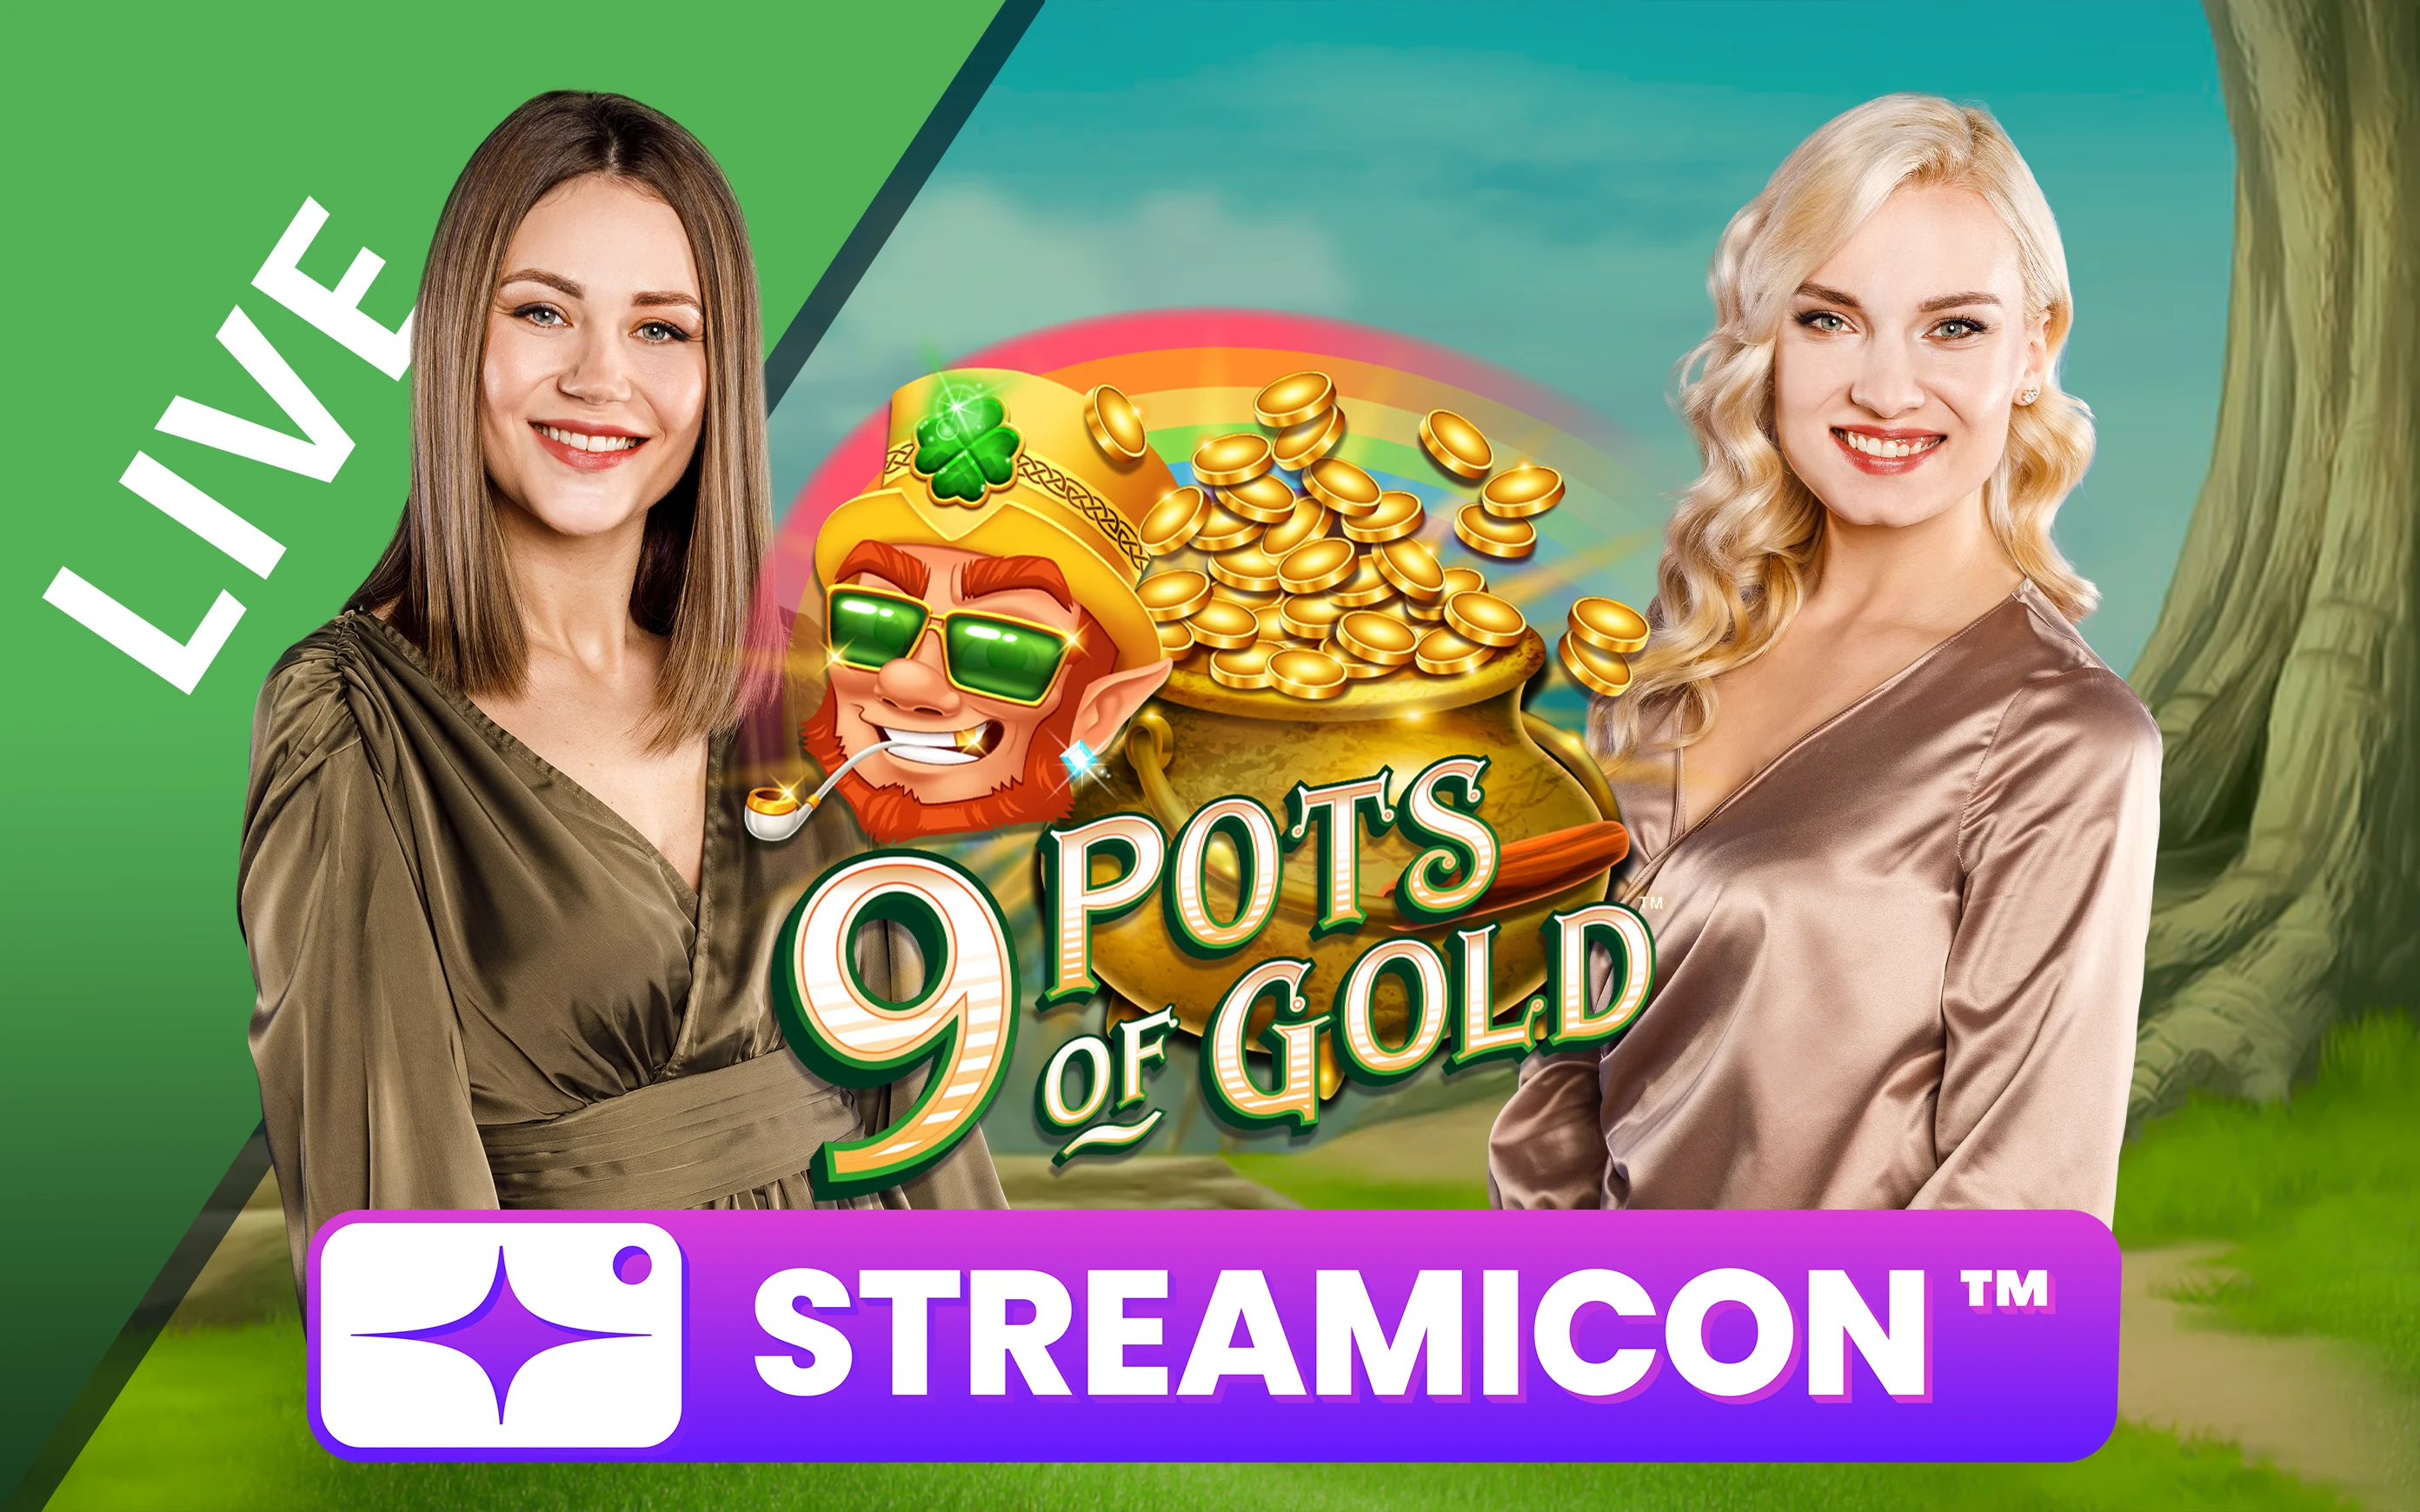 Грайте у 9 Pots of Gold™ Streamicon™ в онлайн-казино Starcasino.be